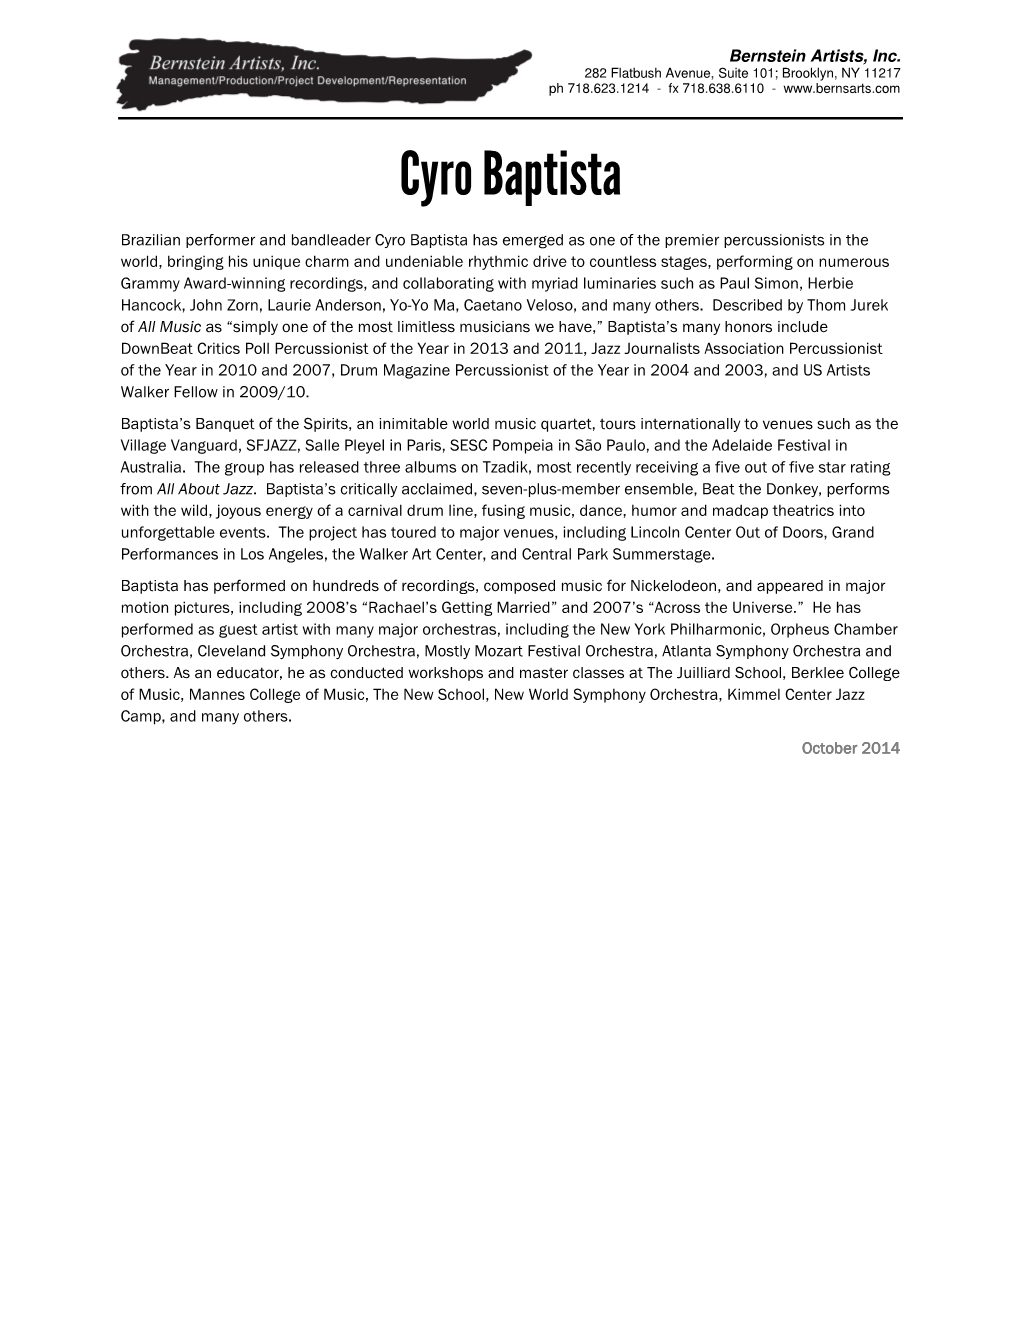 Cyro Baptista